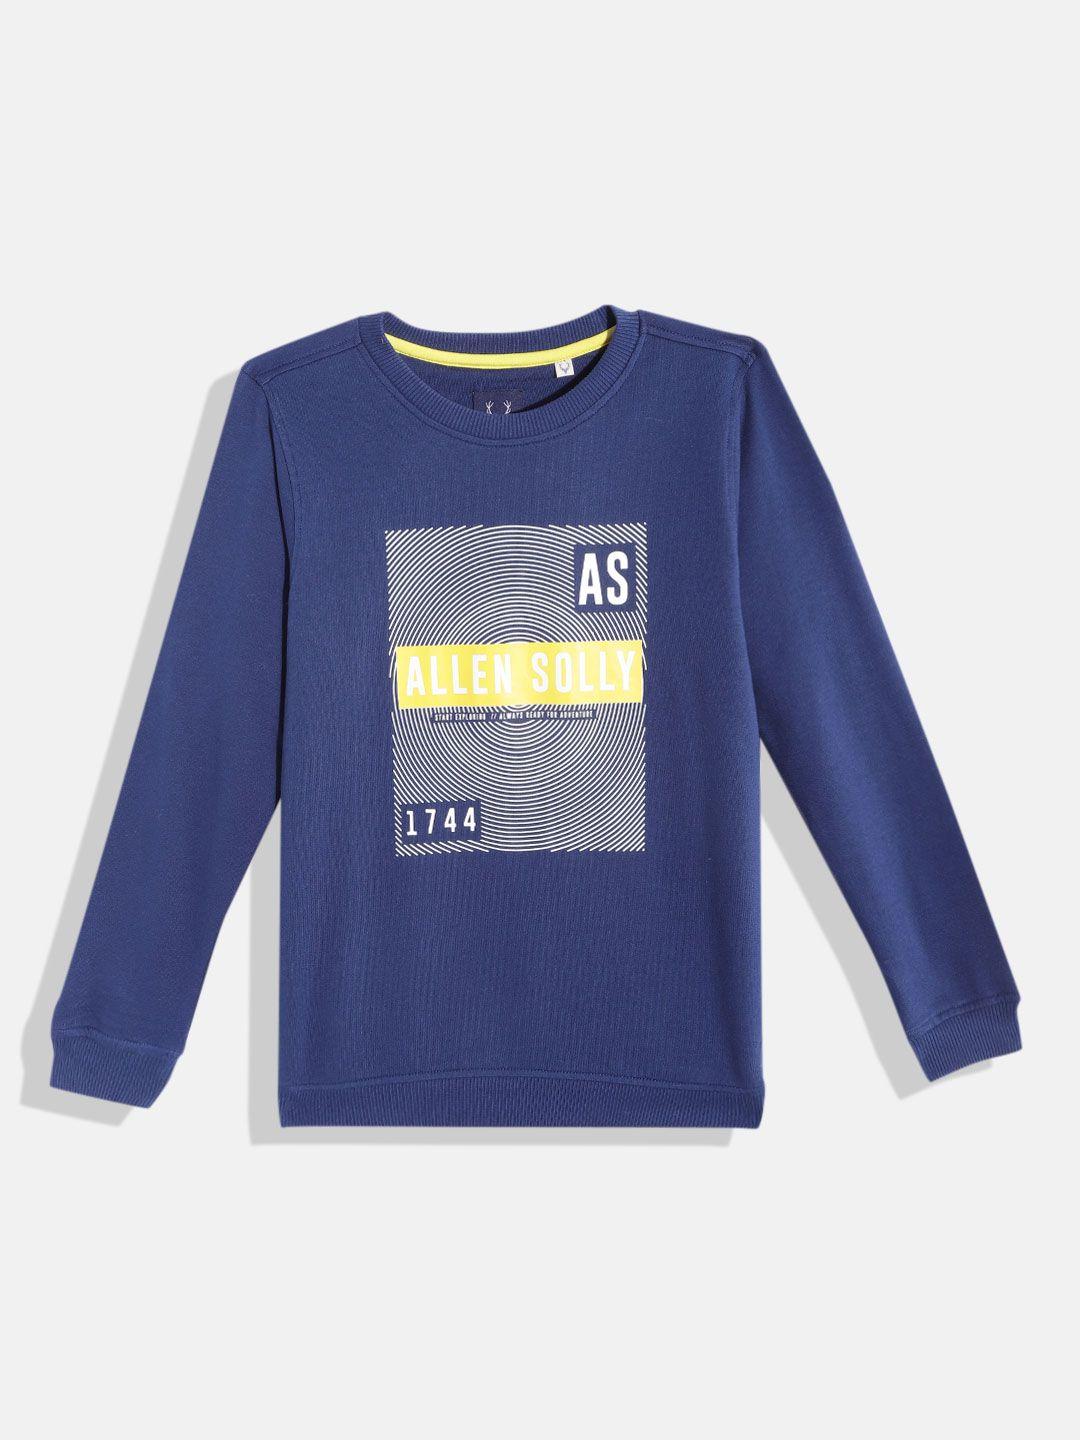 allen solly junior boys blue & white brand logo printed sweatshirt